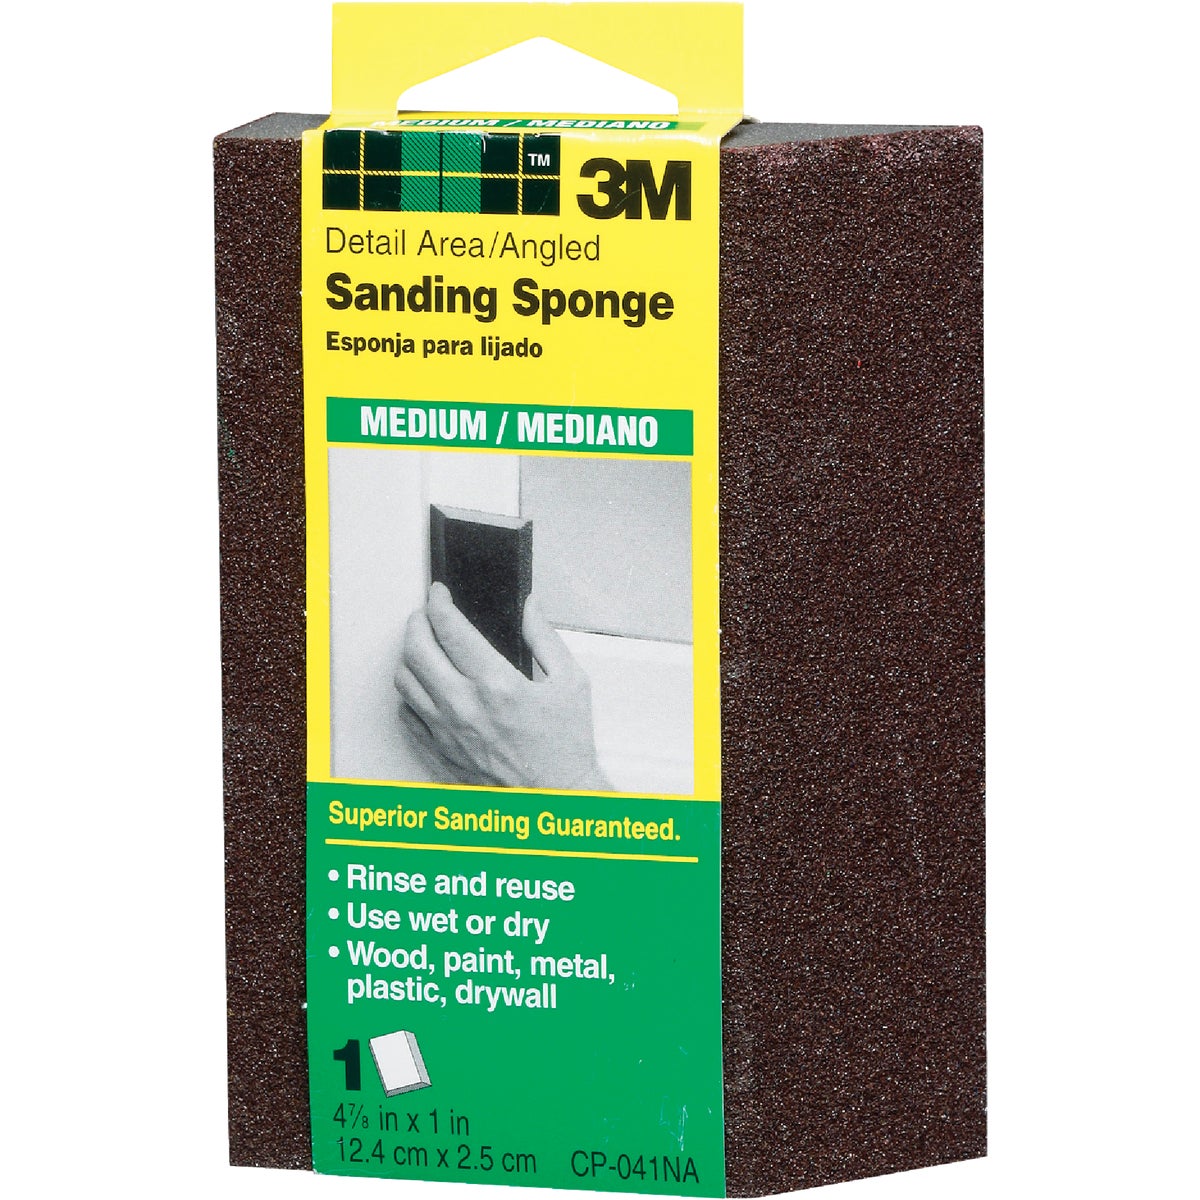 3M Angled Detail Area All-Purpose 2-7/8 In. x 4-7/8 In. x 1 In. Medium Sanding Sponge